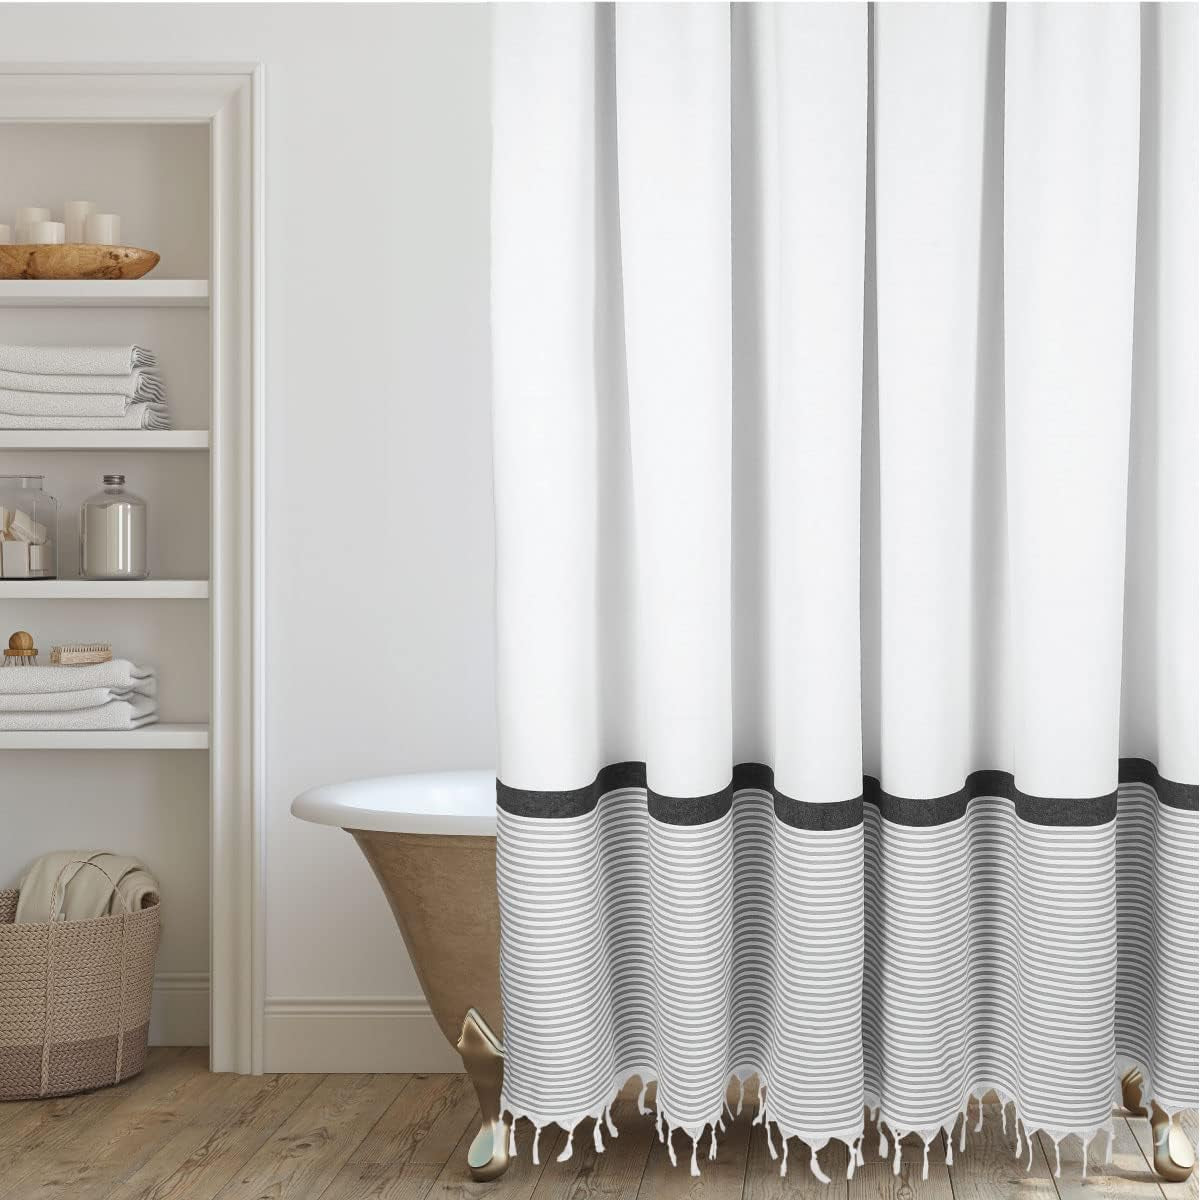 HALL & PERRY Modern Farmhouse Tassel Shower Curtain 100% Cotton Striped Fabric Shower Curtain with Tassels for Bathroom Décor (Black 5, 72"X72")